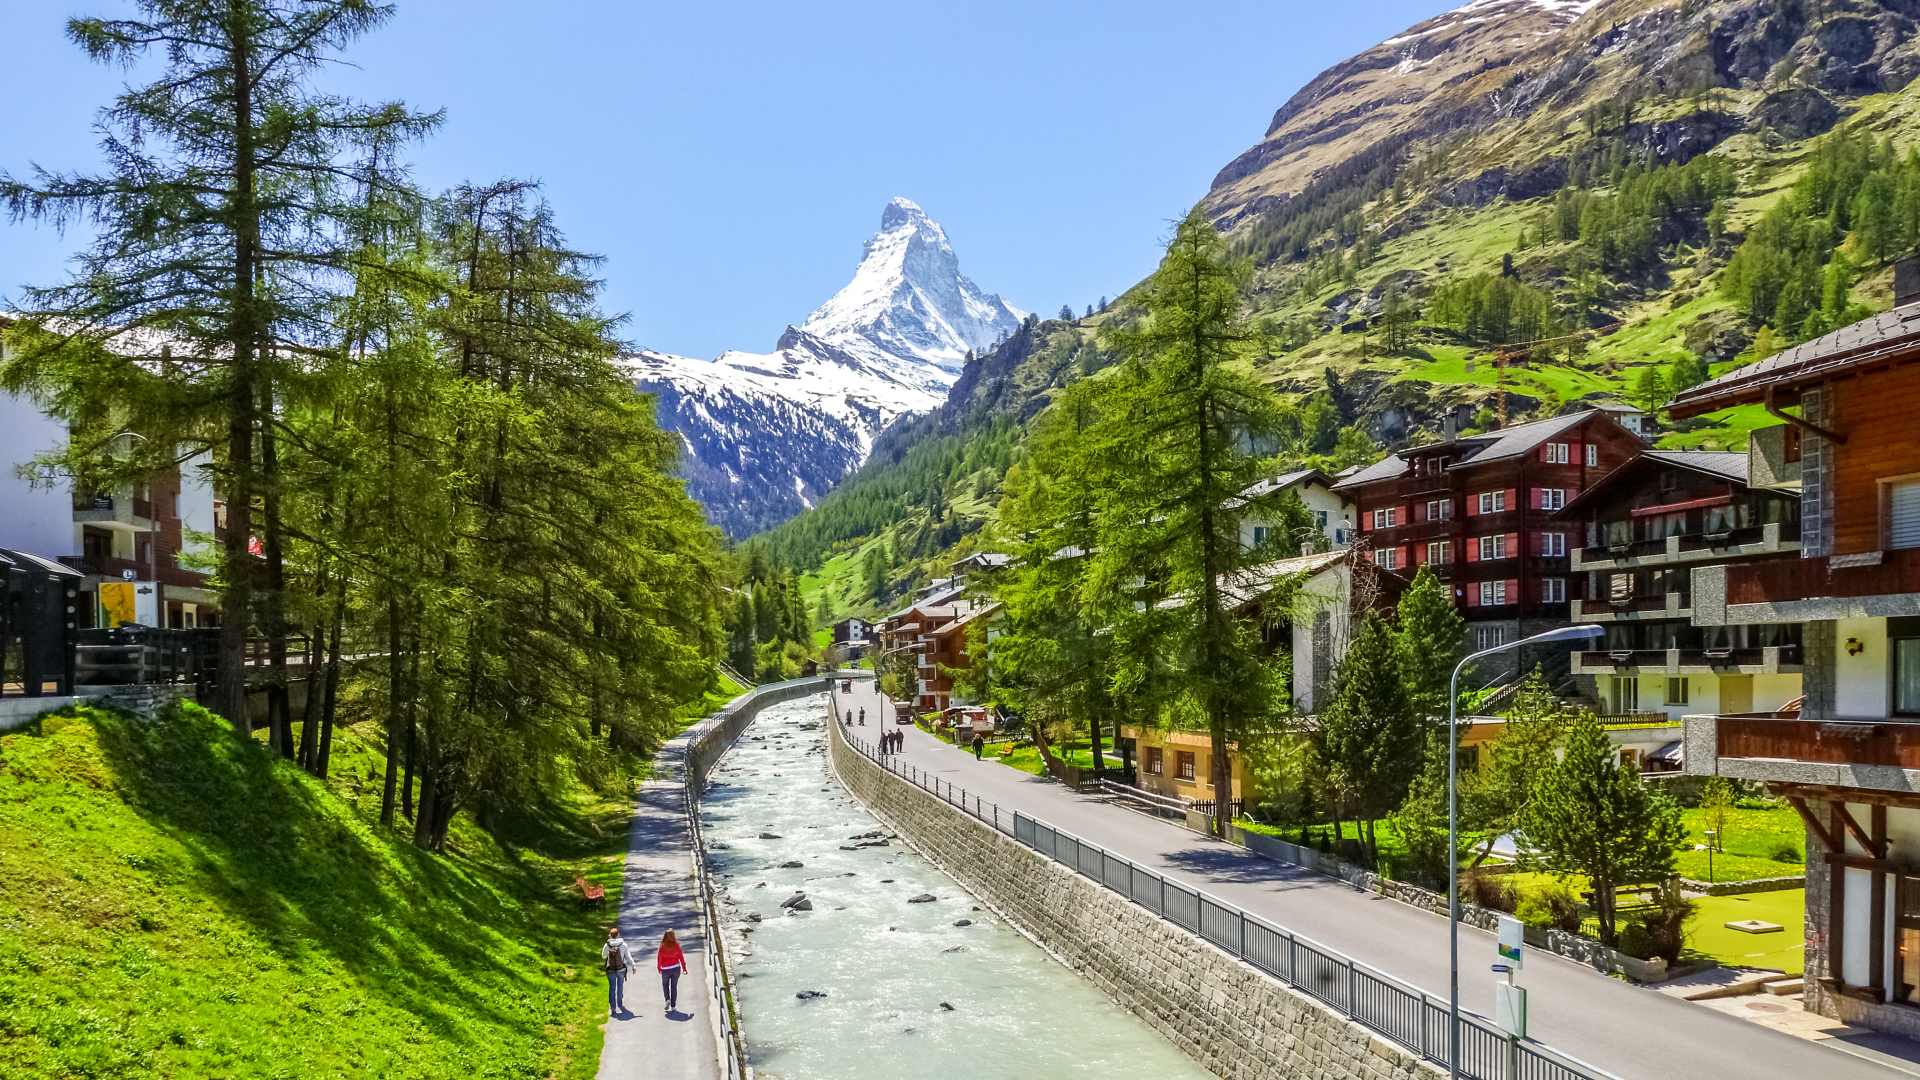 The Matterhorn from Zermatt in Switzerland